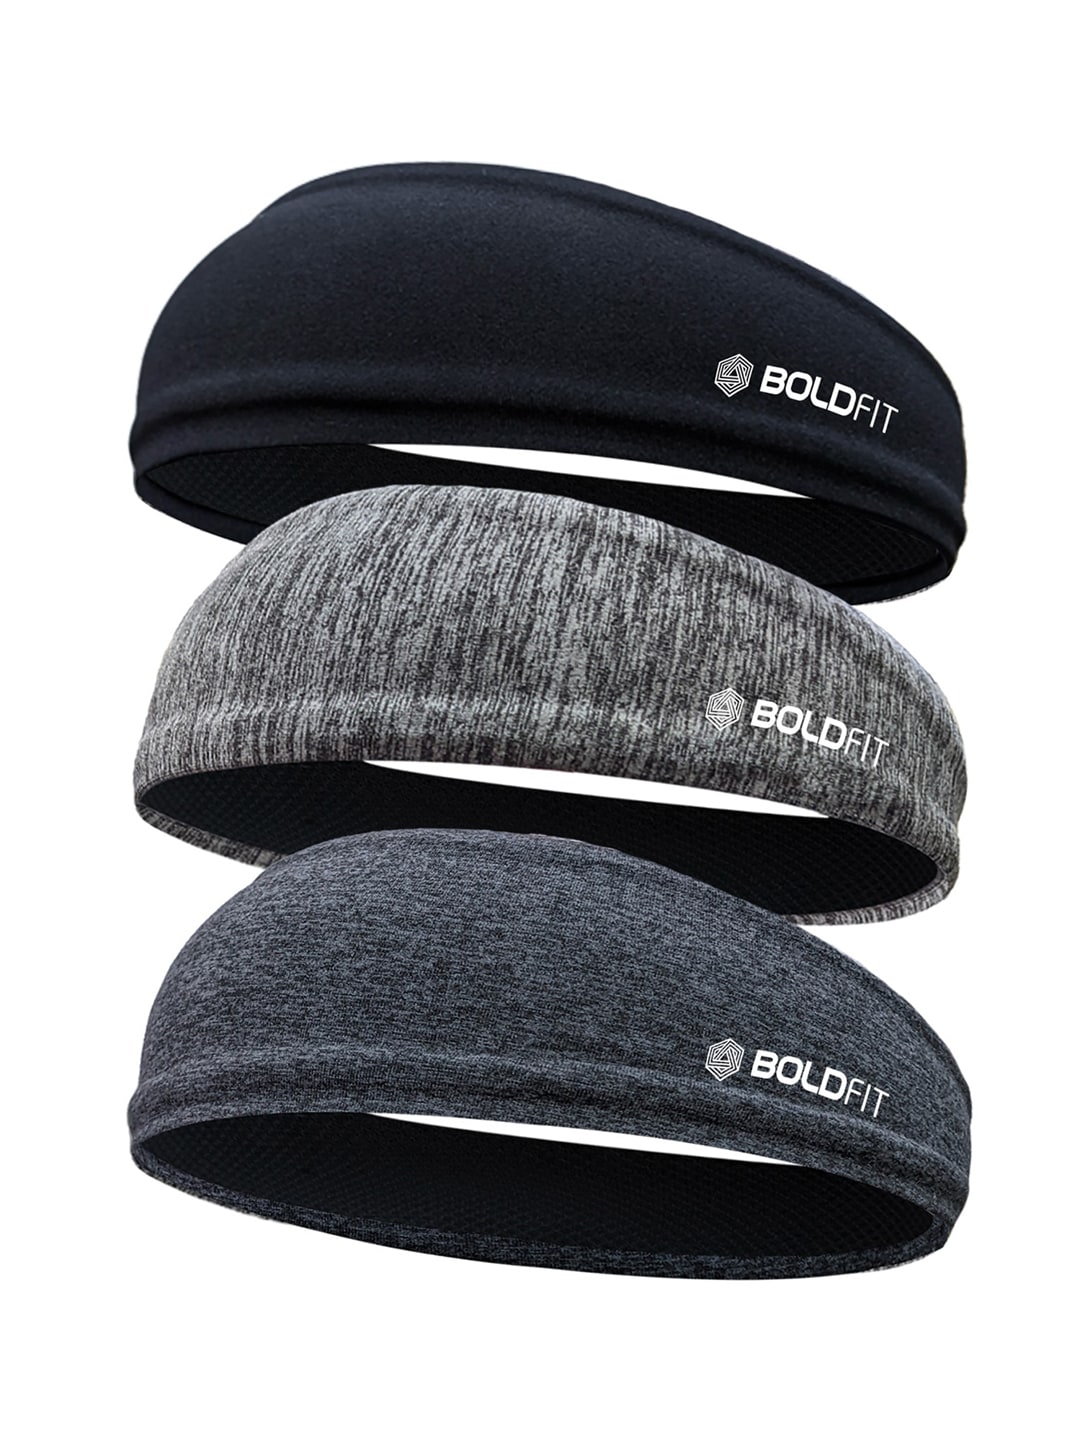 BOLDFIT Black & Grey Non Slip Headband Price in India